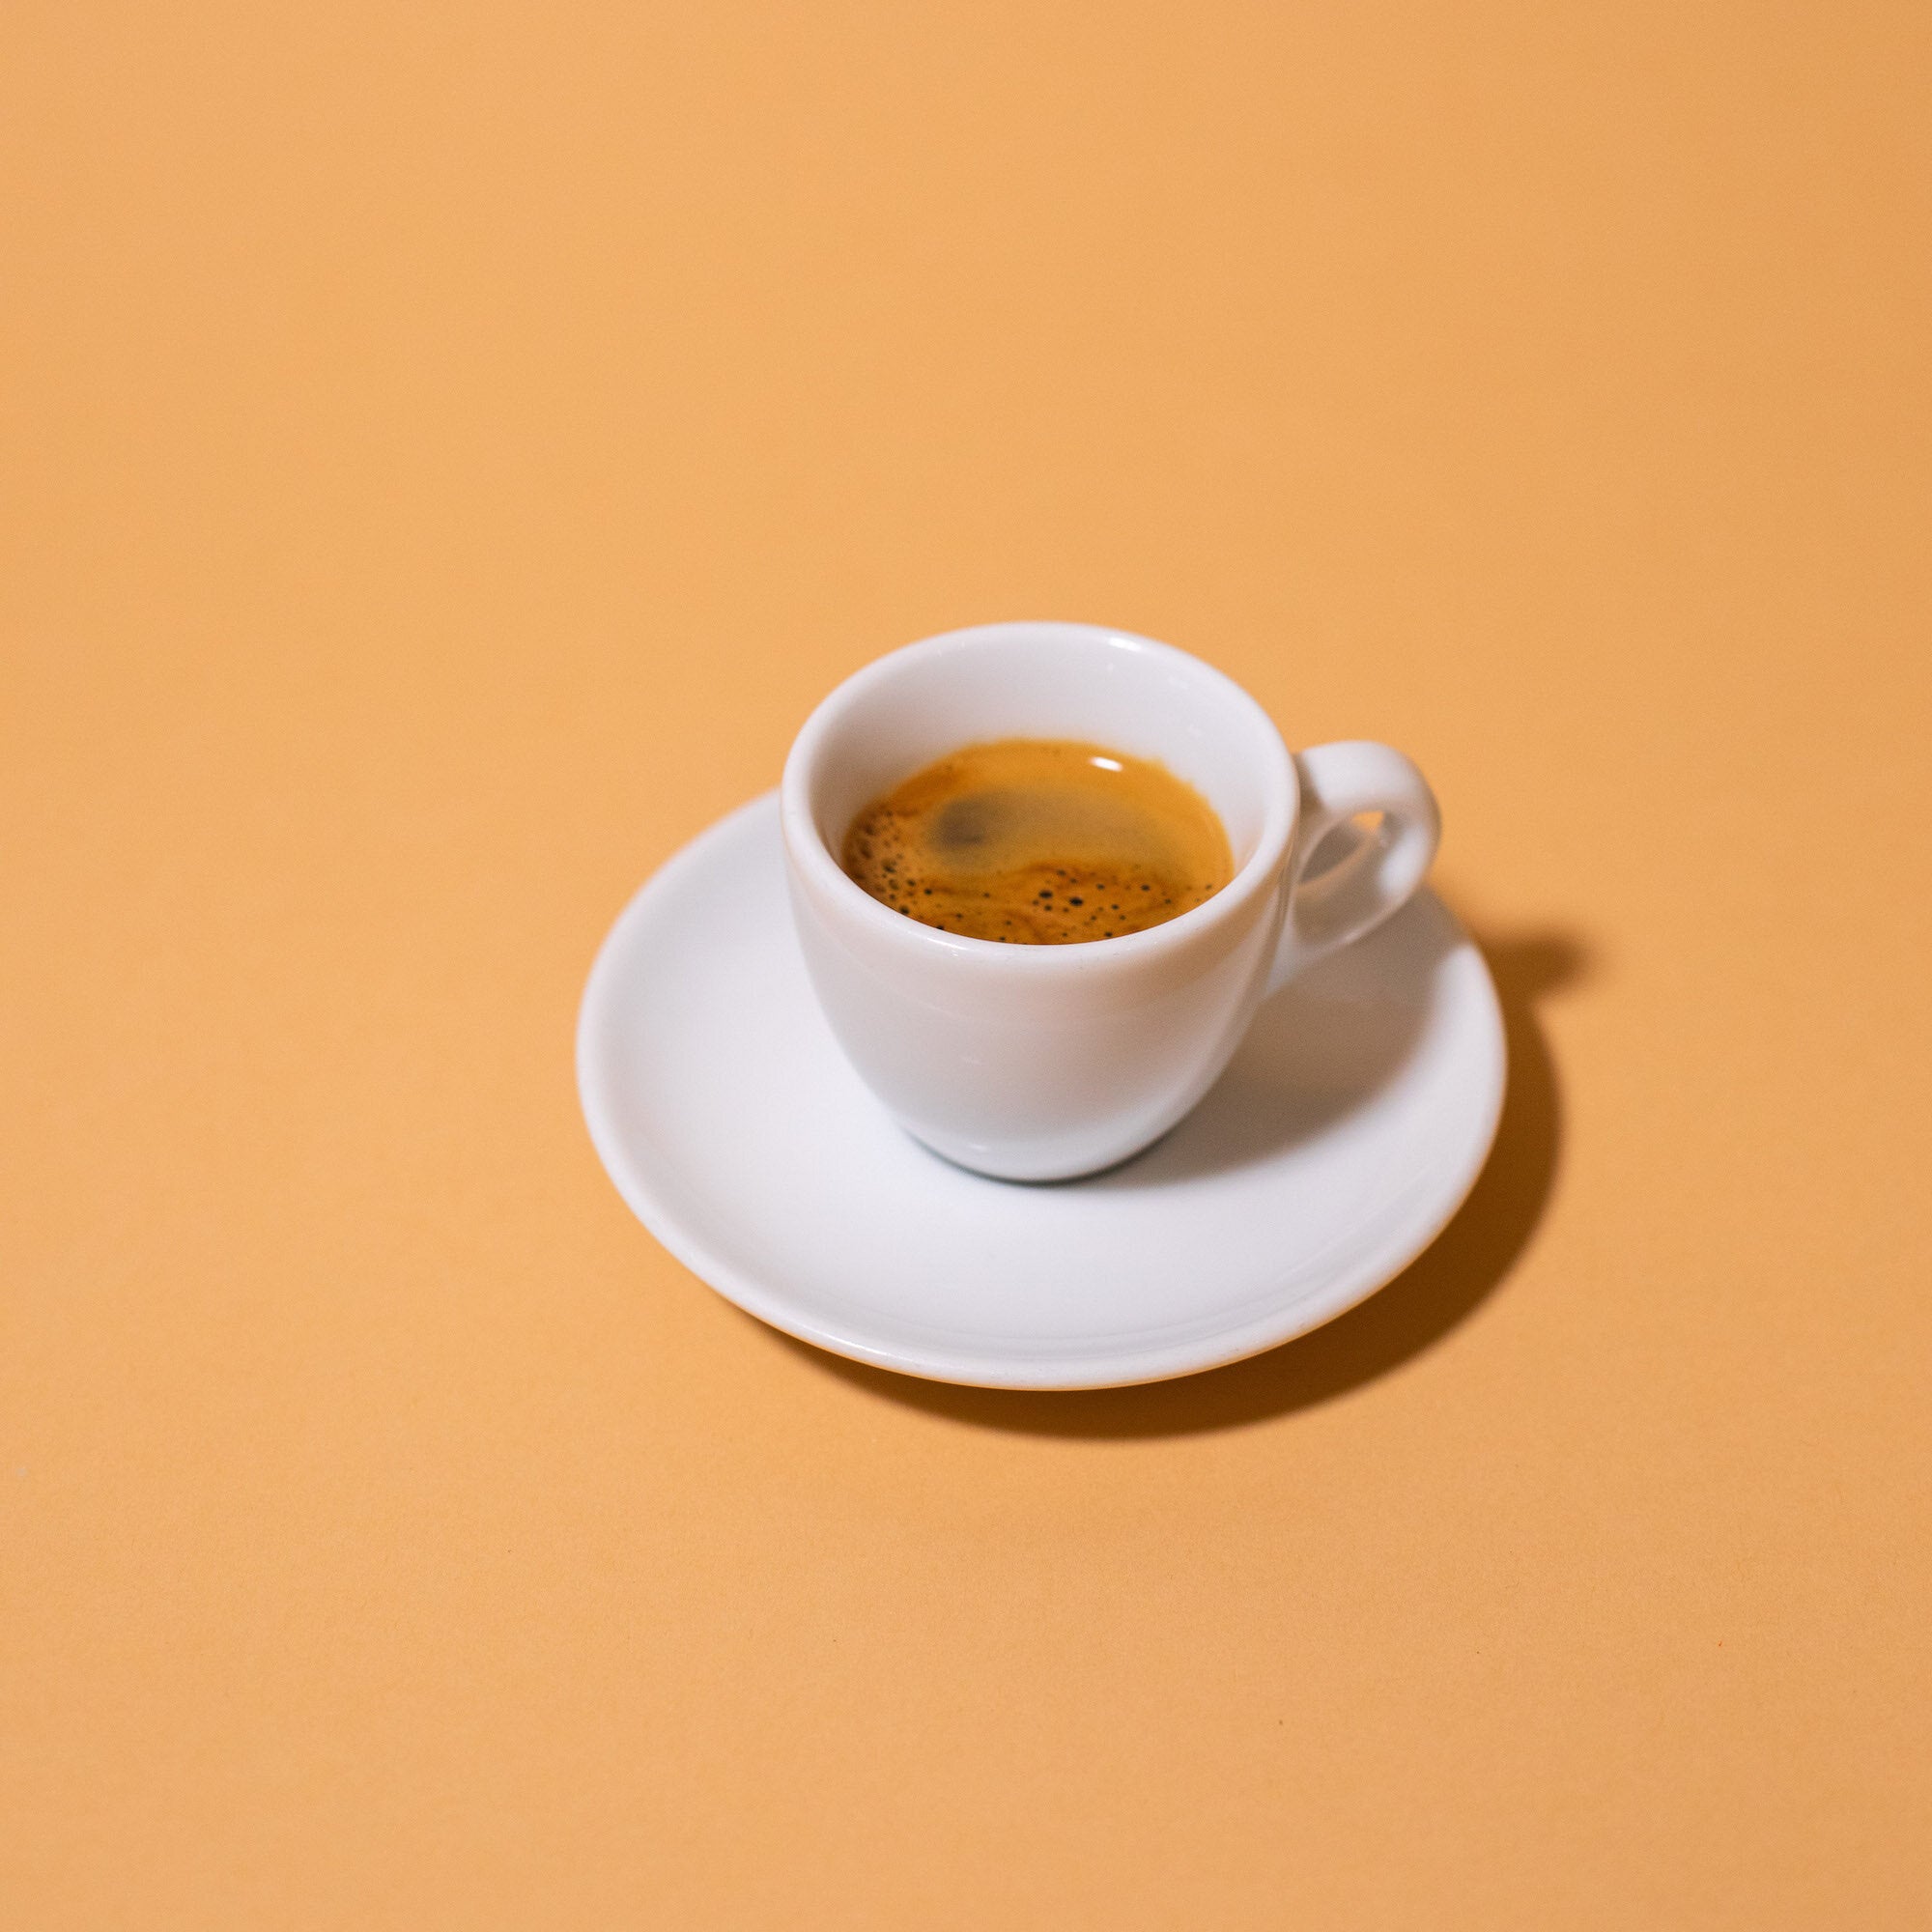 Crema Coffee Products - Specialty espresso tools for espresso fanatics